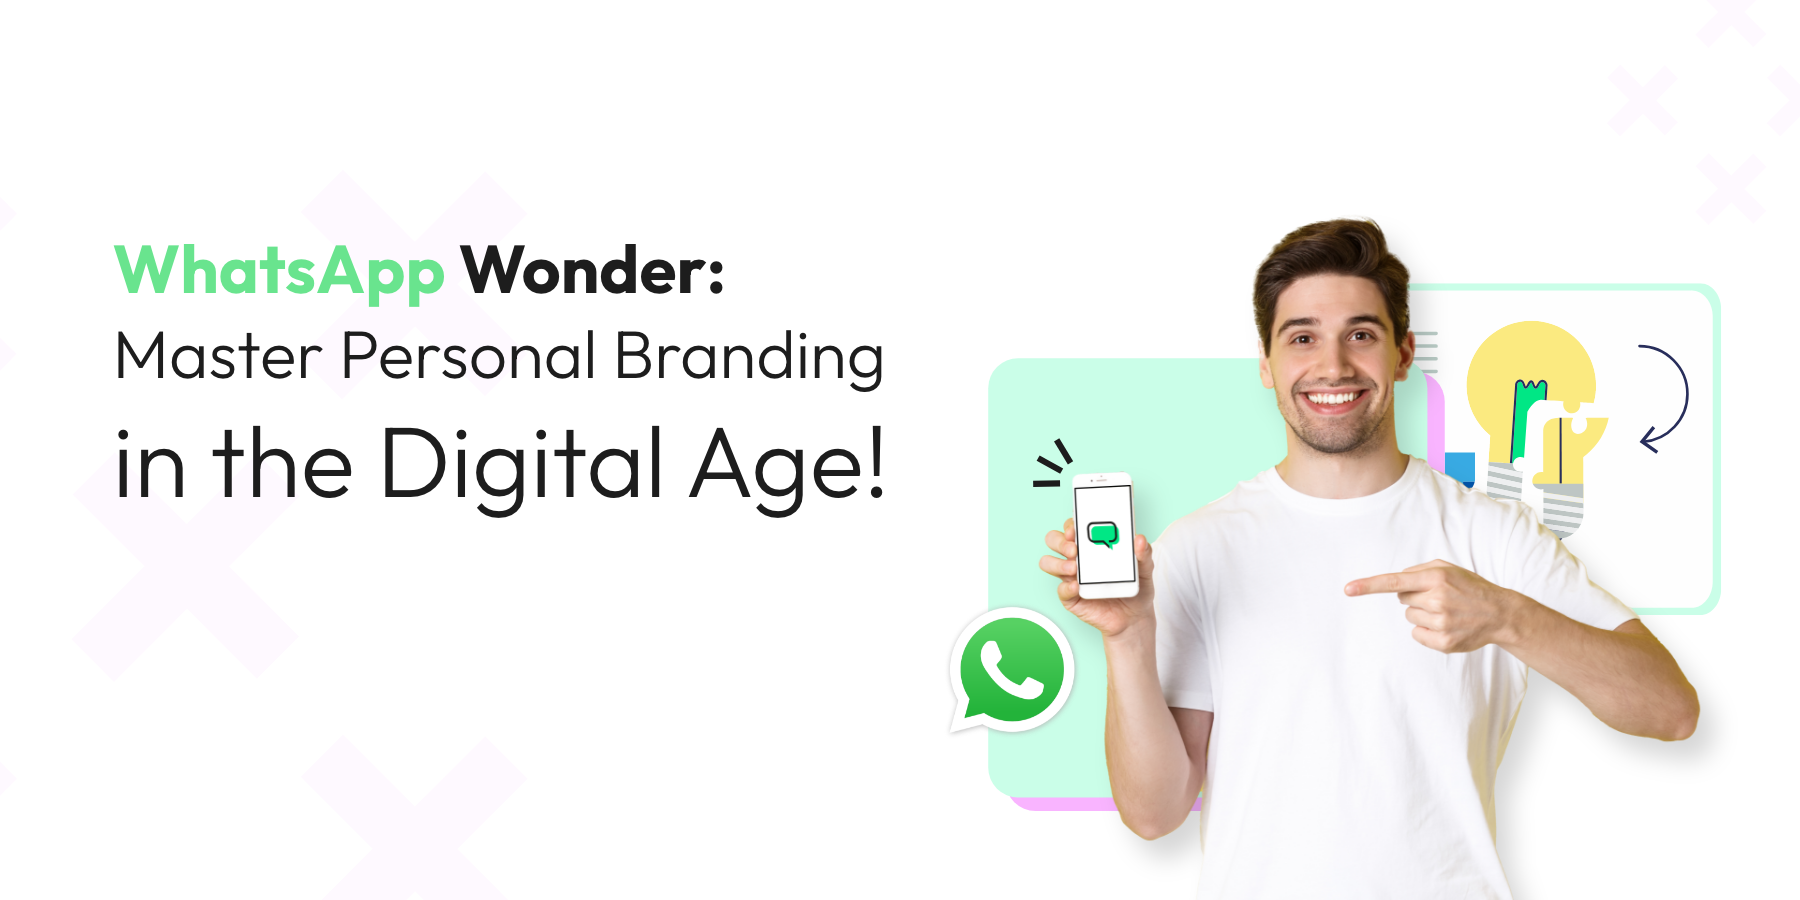 WhatsApp Wonder: Master Personal Branding in the Digital Age! 